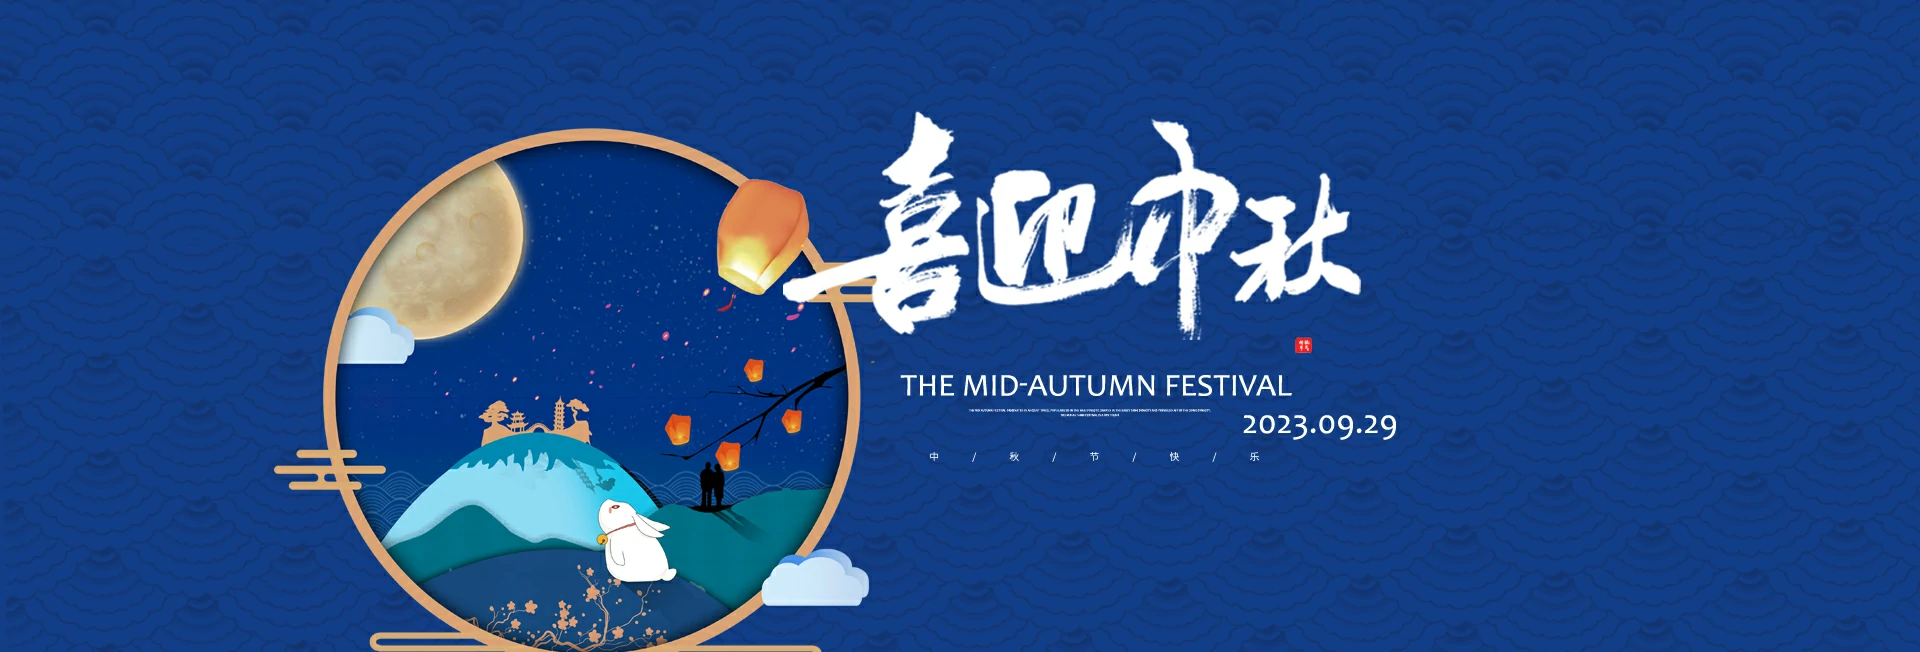 The Mid-autumn Festival